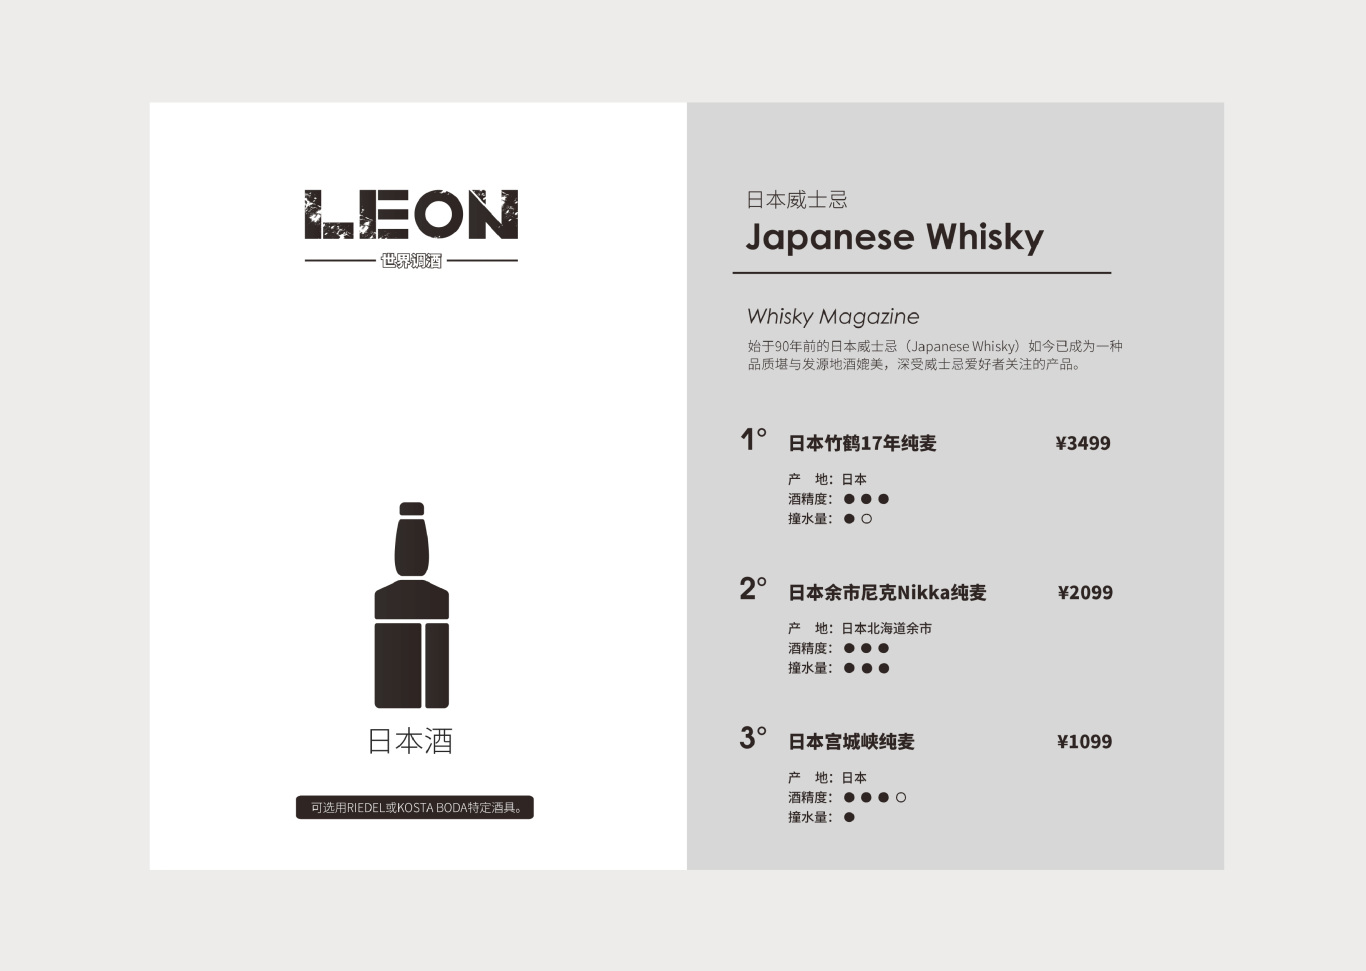 LEON 精酿调酒图19